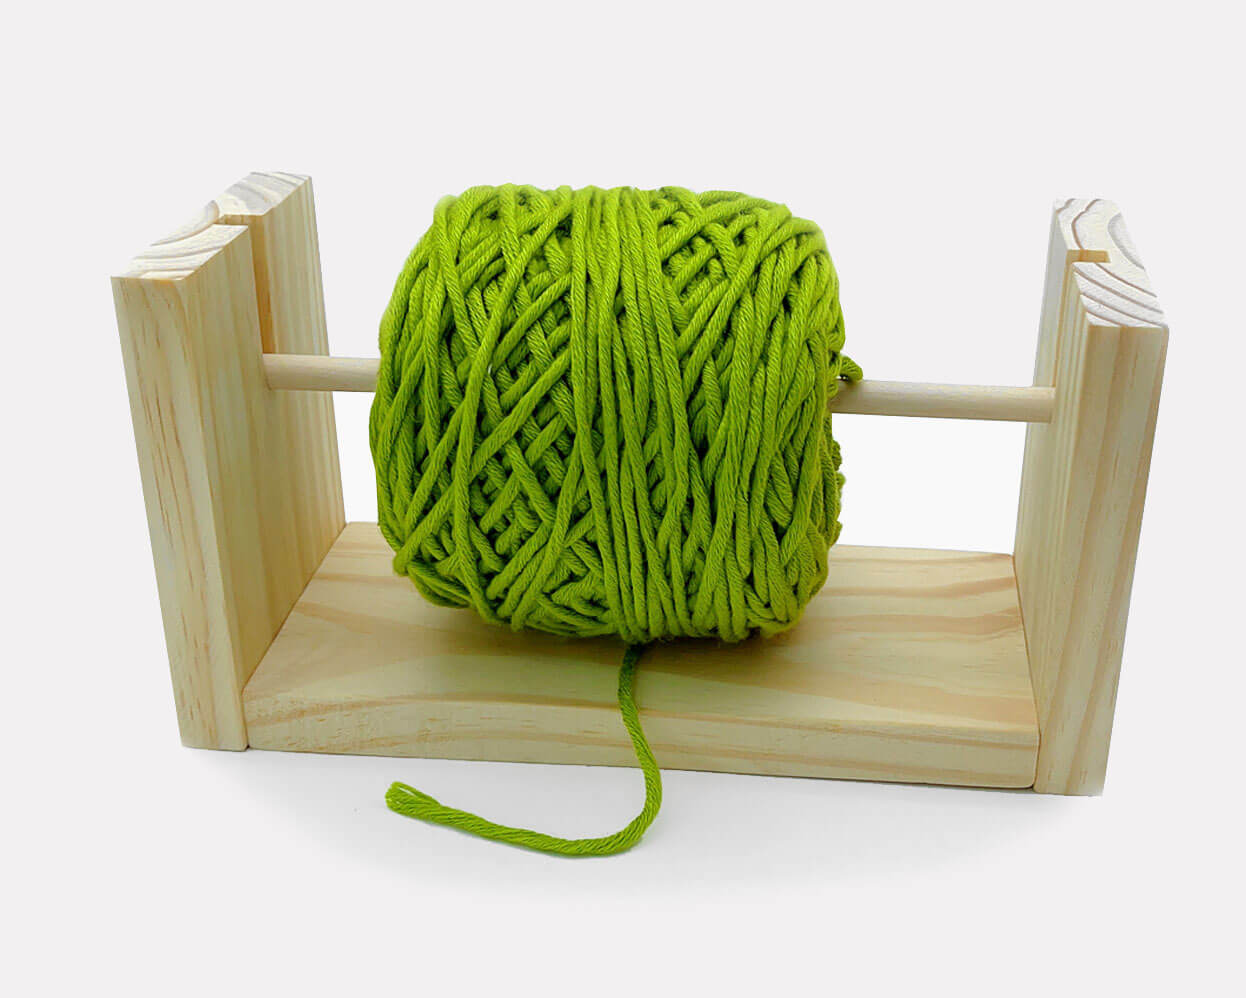 XZJMY horizontal yarn spindle feeder or dispenser,wooden